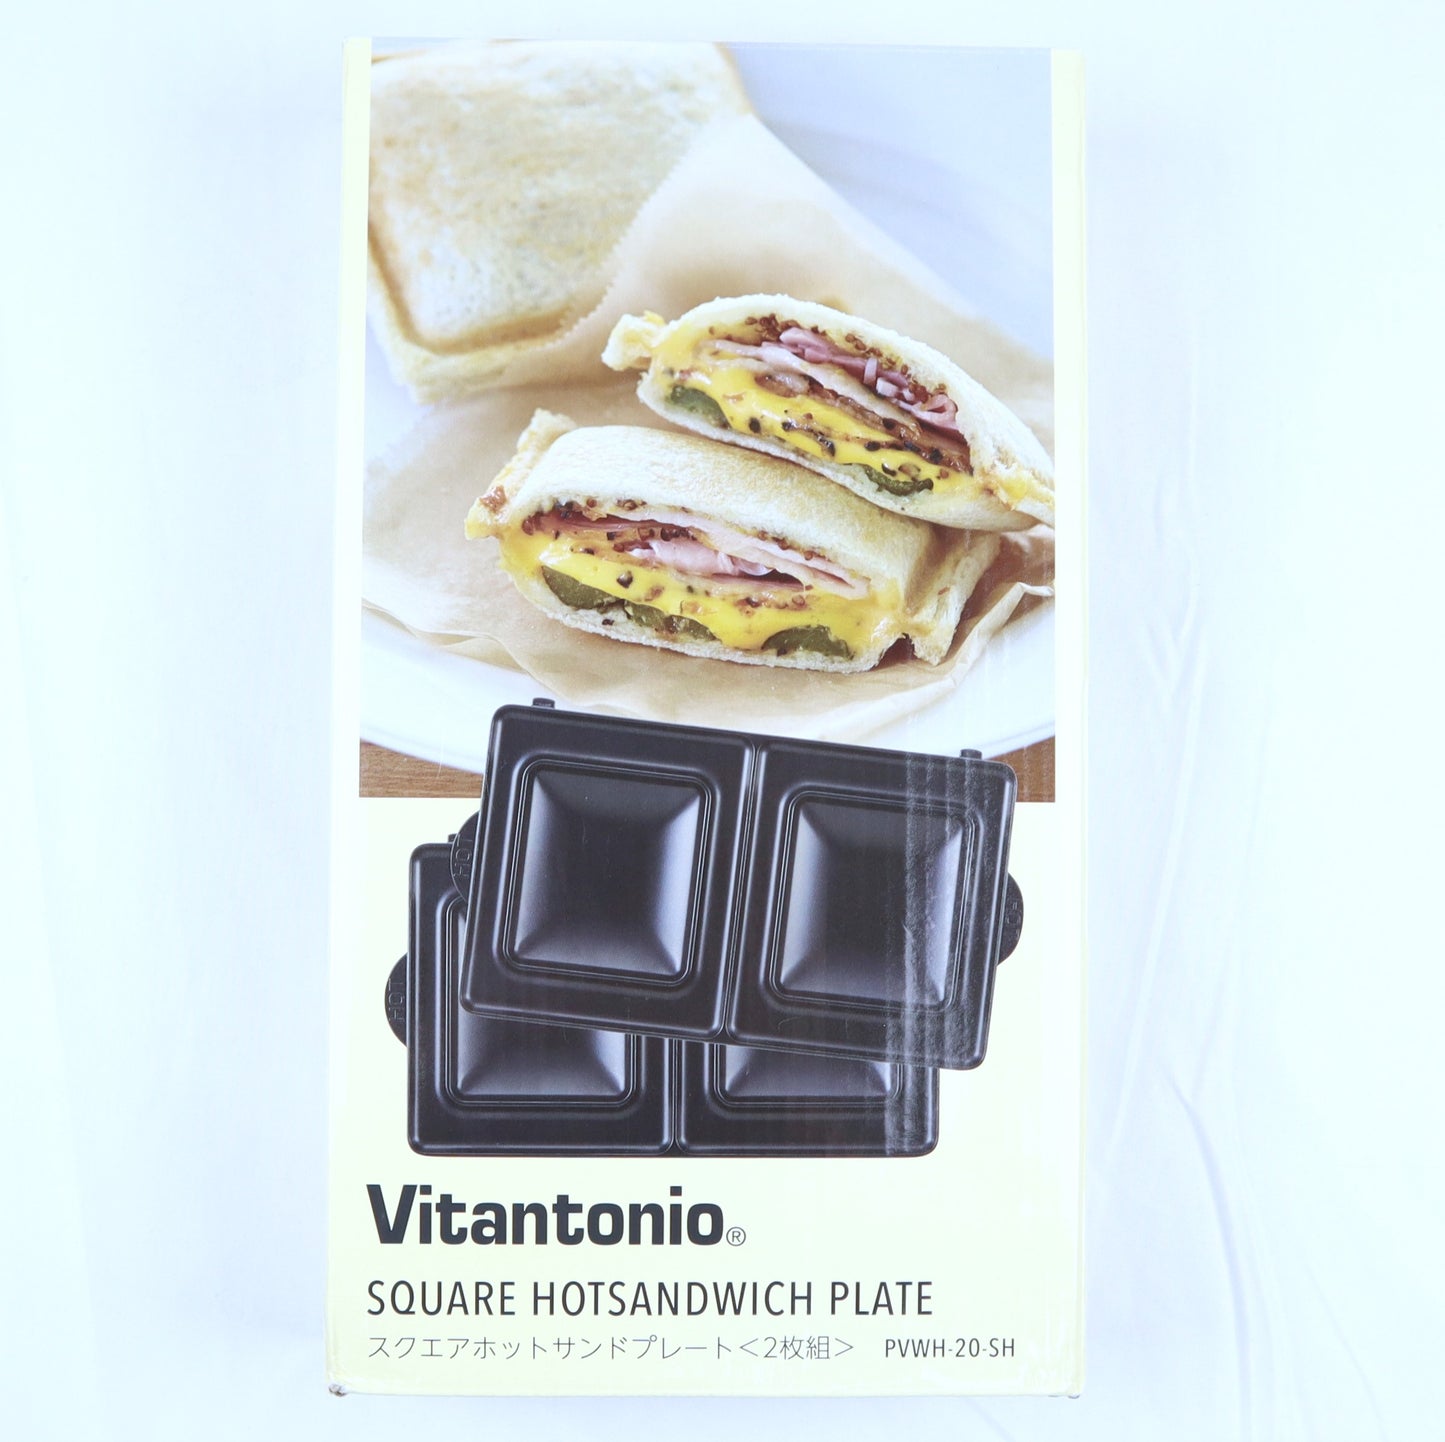 Vitantonio PVWH-20-SH Hot sandwitch plates 2 pcs_CRSJP_130